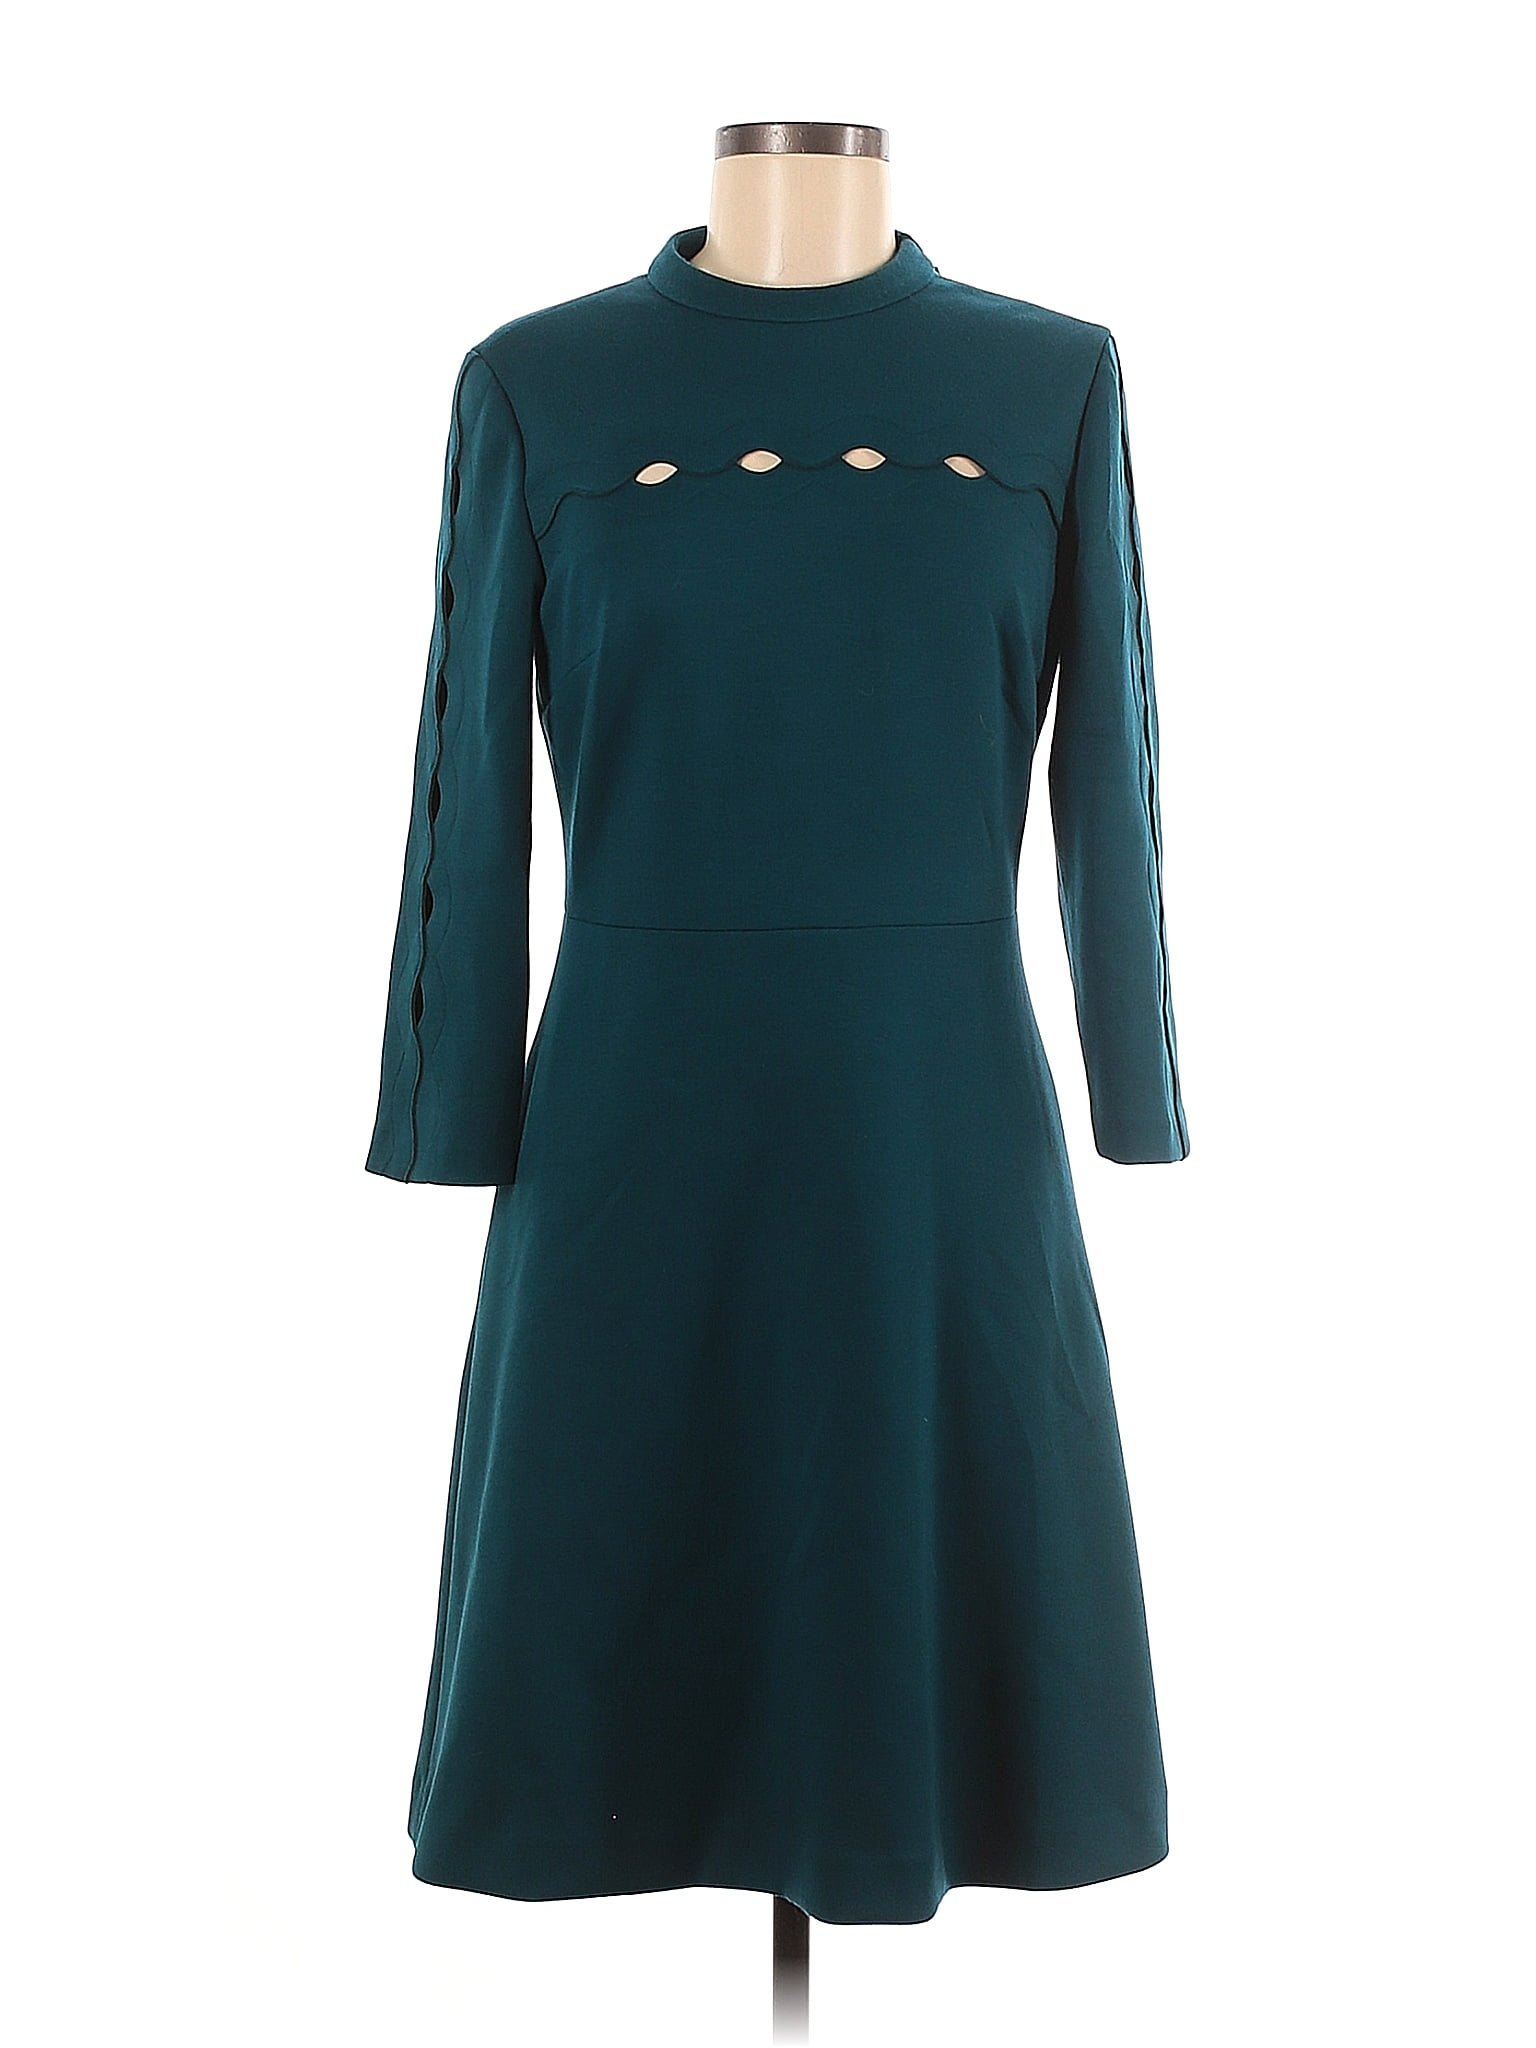 Elie Tahari Solid Teal Casual Dress Size 6 - 69% off | thredUP